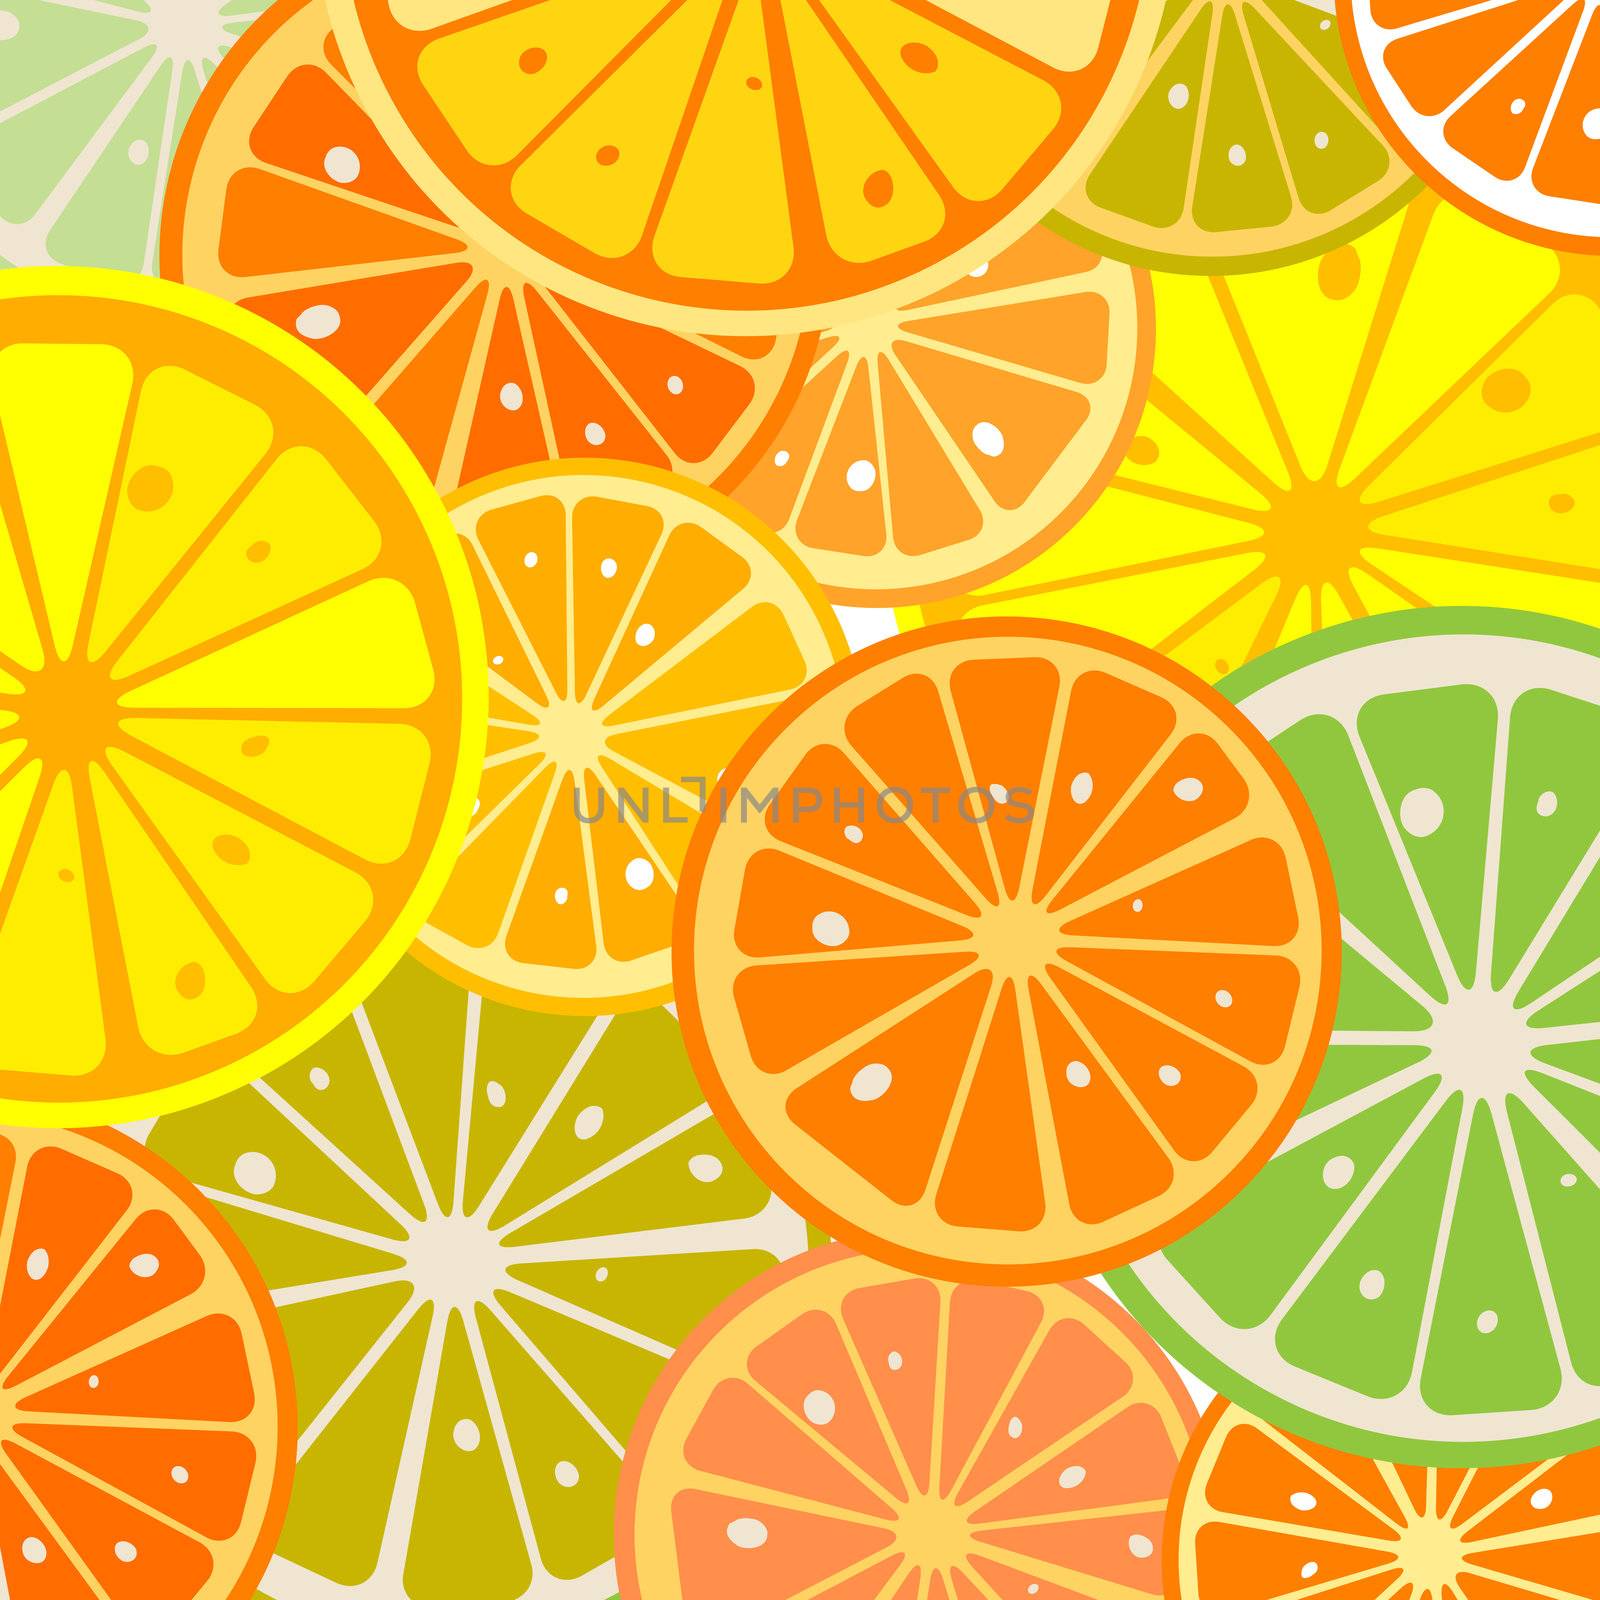 Lemon slices by Lirch